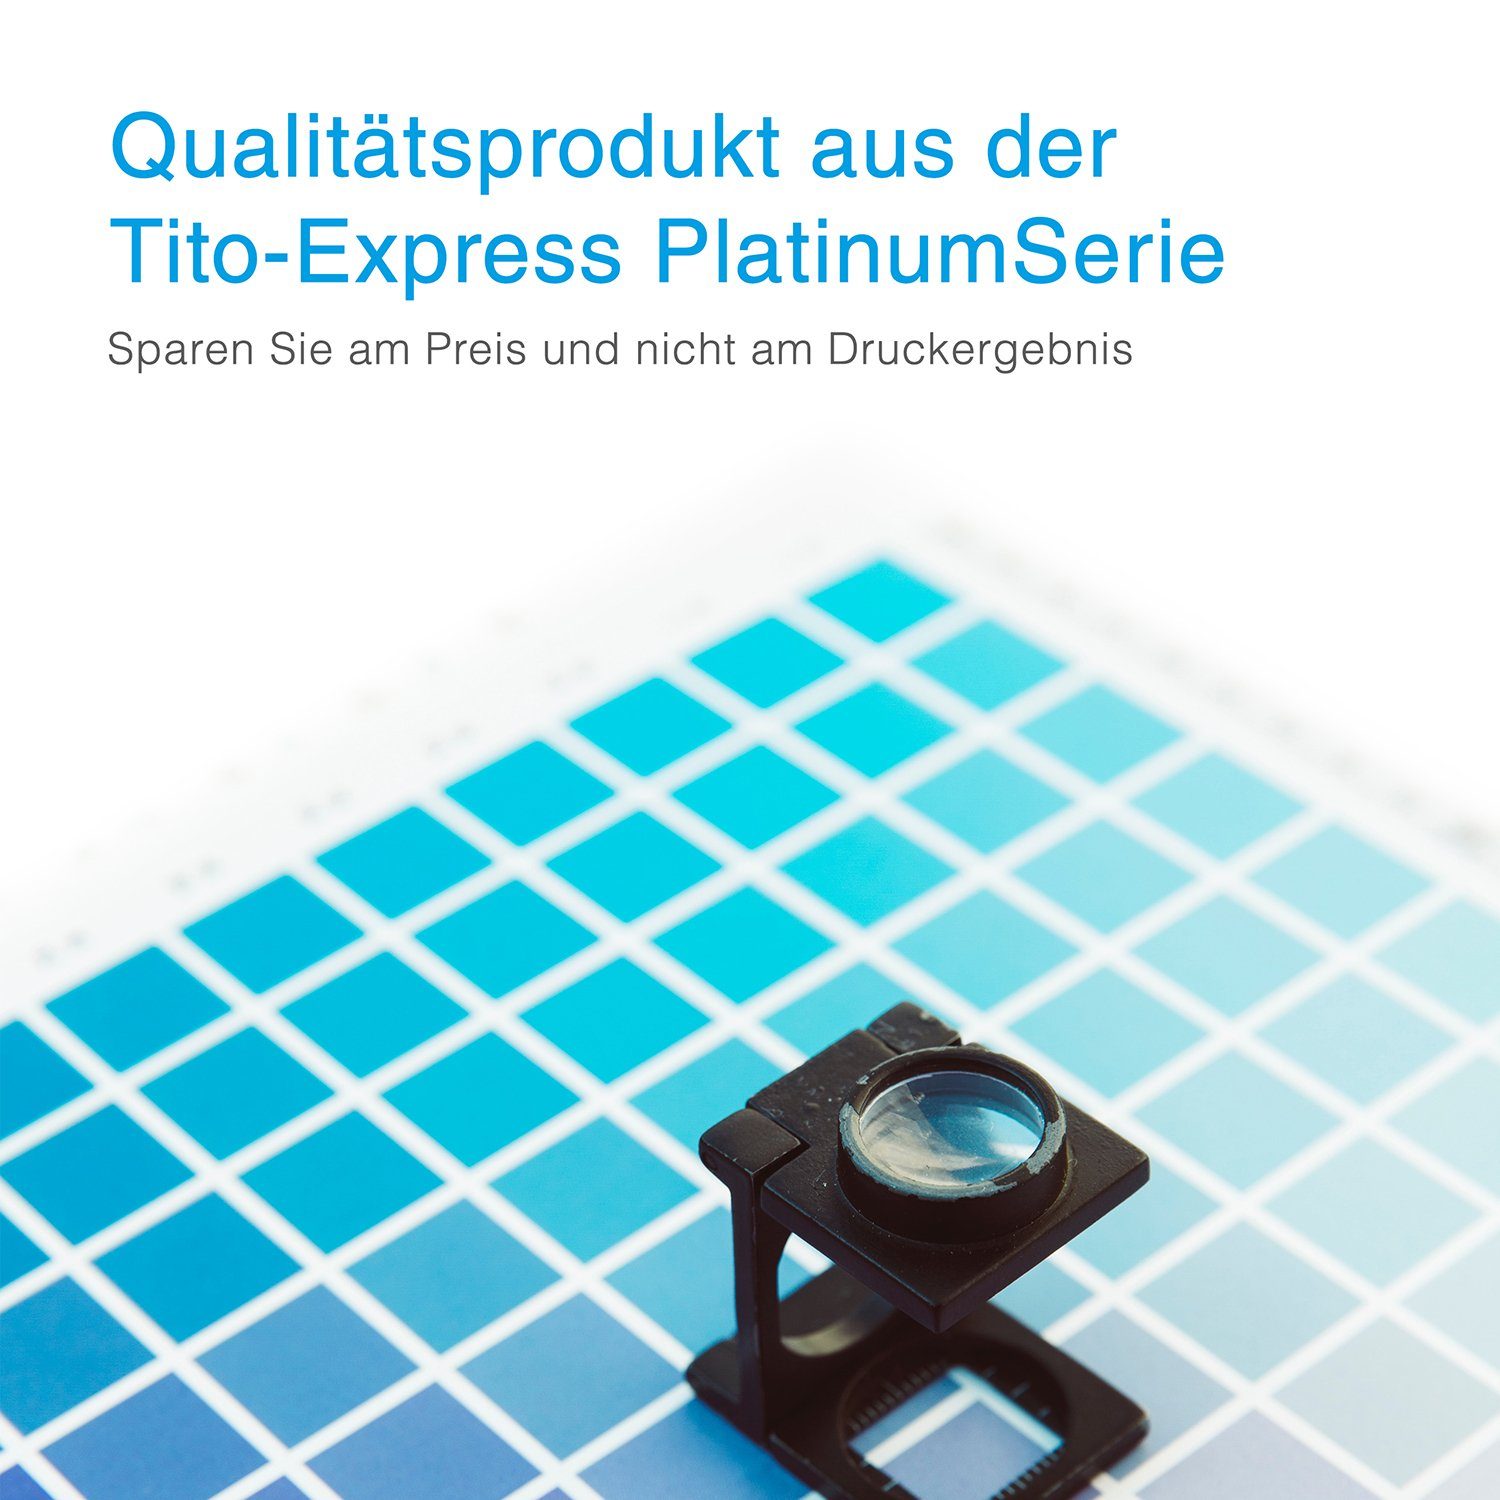 Tito-Express ersetzt HP 342 XL 5400 C3194 Series C3185 DeskJet Color Tintenpatrone 342XL 5420V) C3180 C3170 C3190 (für Photosmart